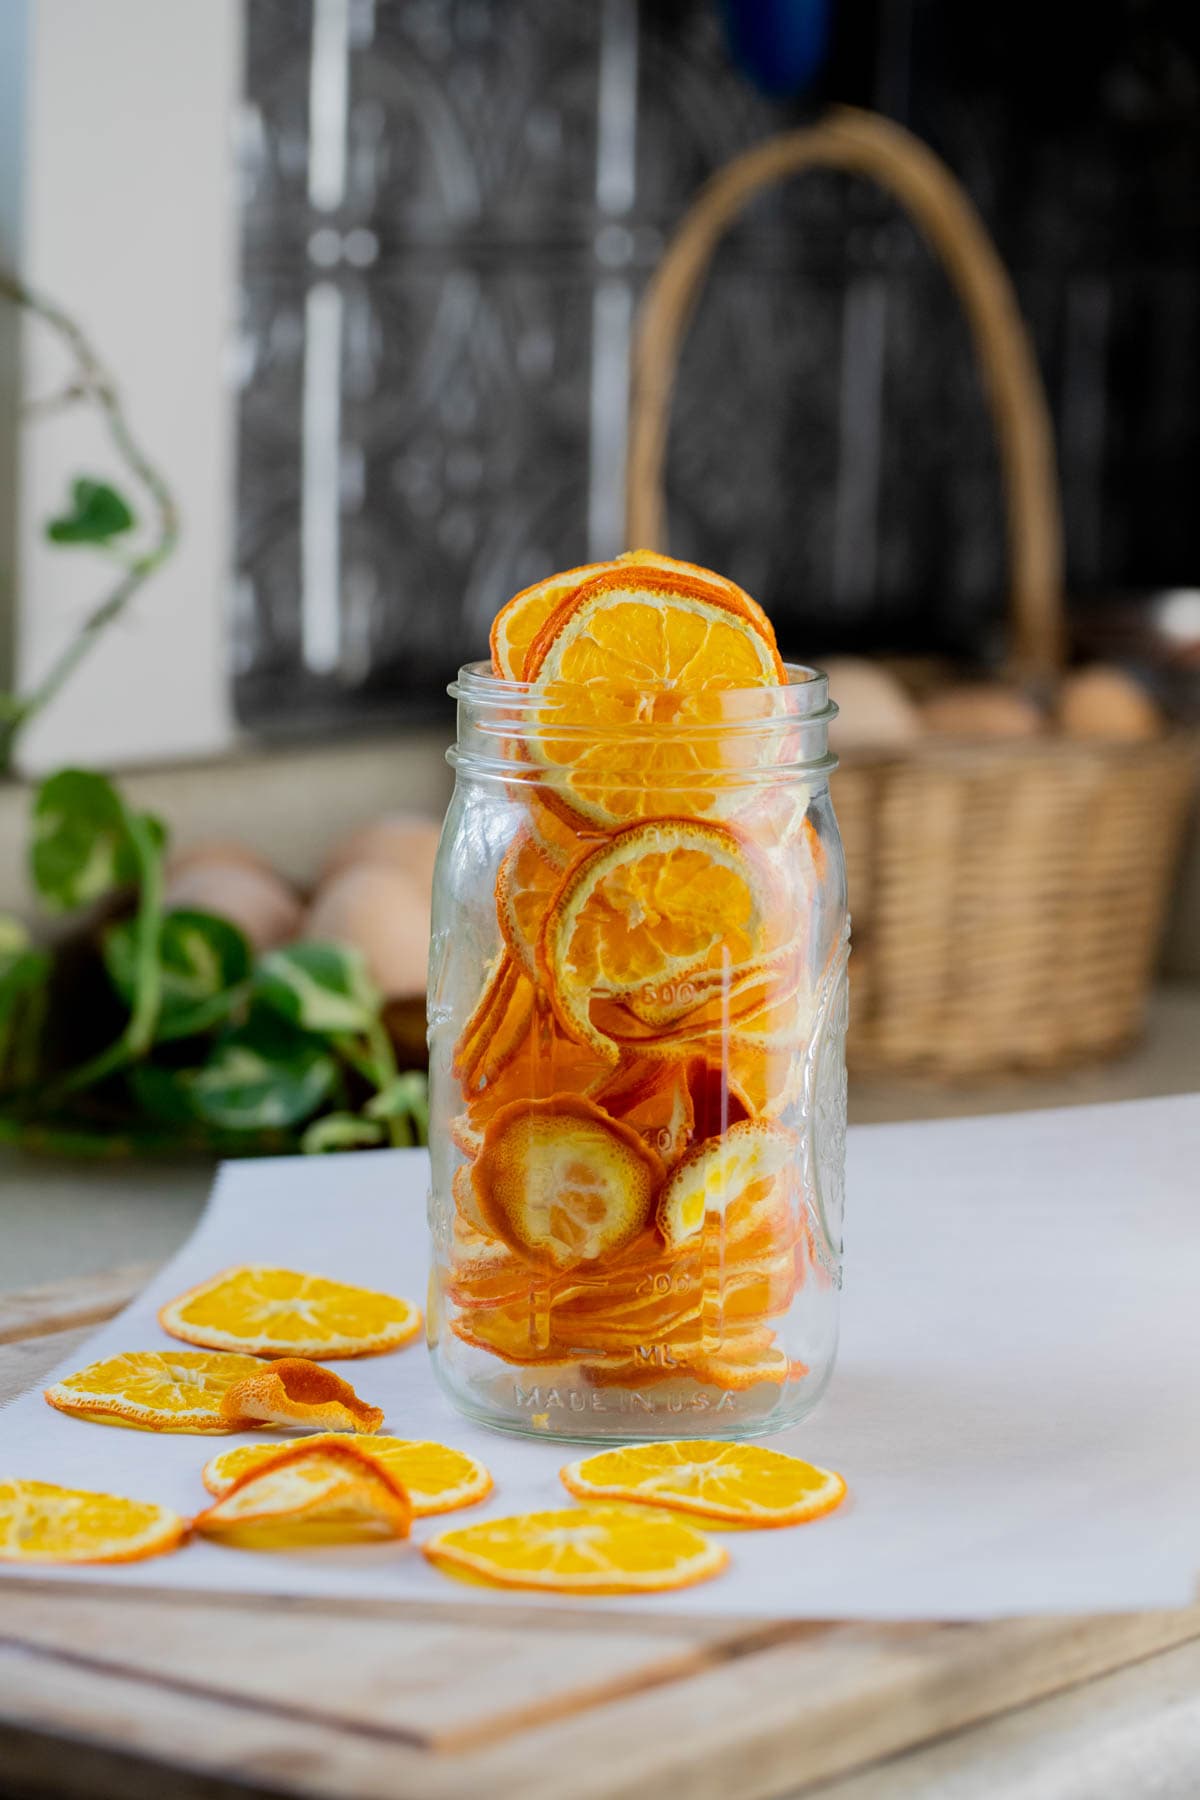 dehydrated orange slices in a jar